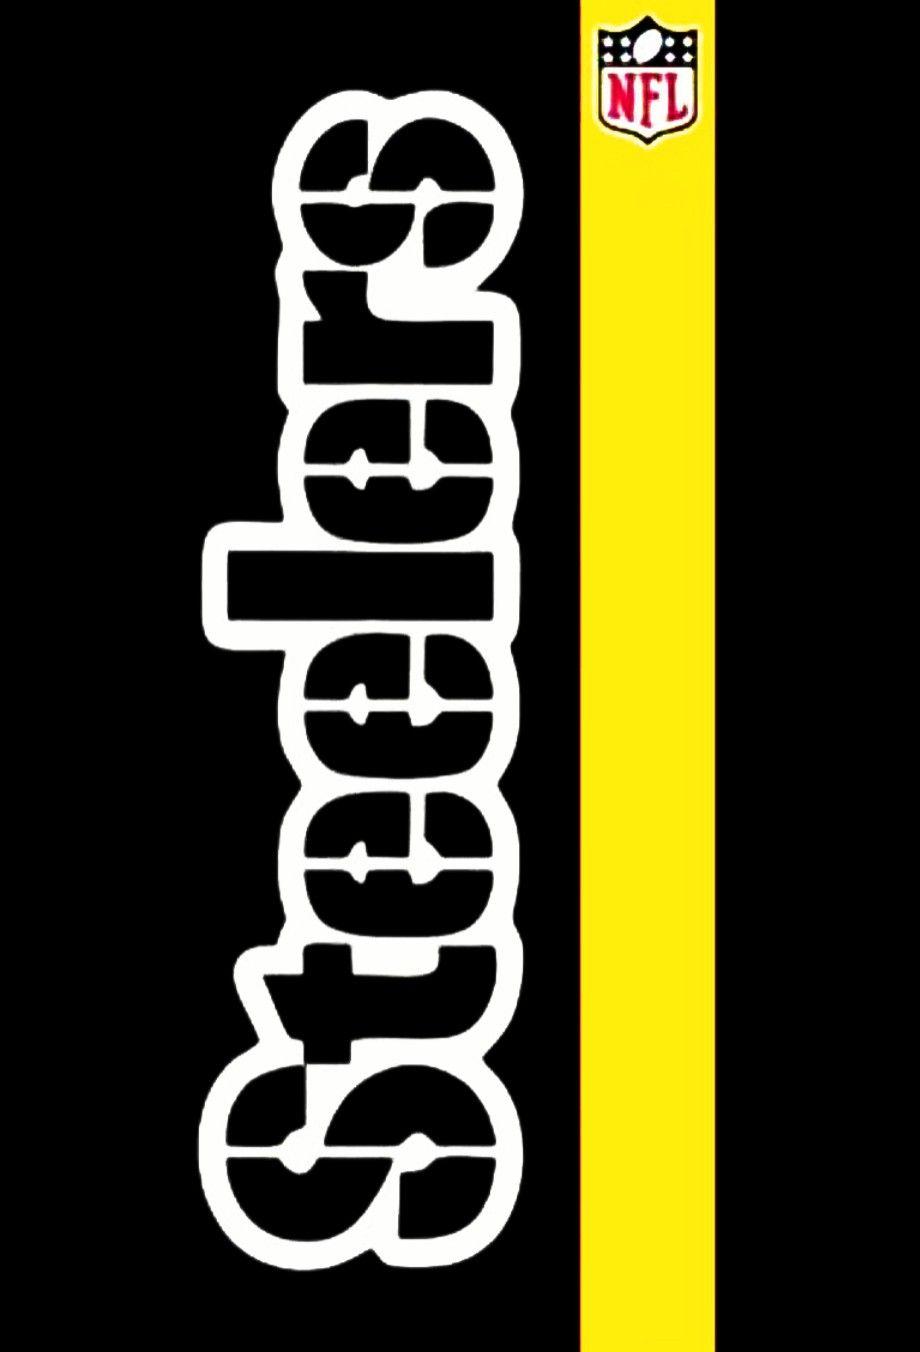 Green and Yellow Steelers Logo - Pin by Tatiana Green on Steelers | Pinterest | Pittsburgh Steelers ...